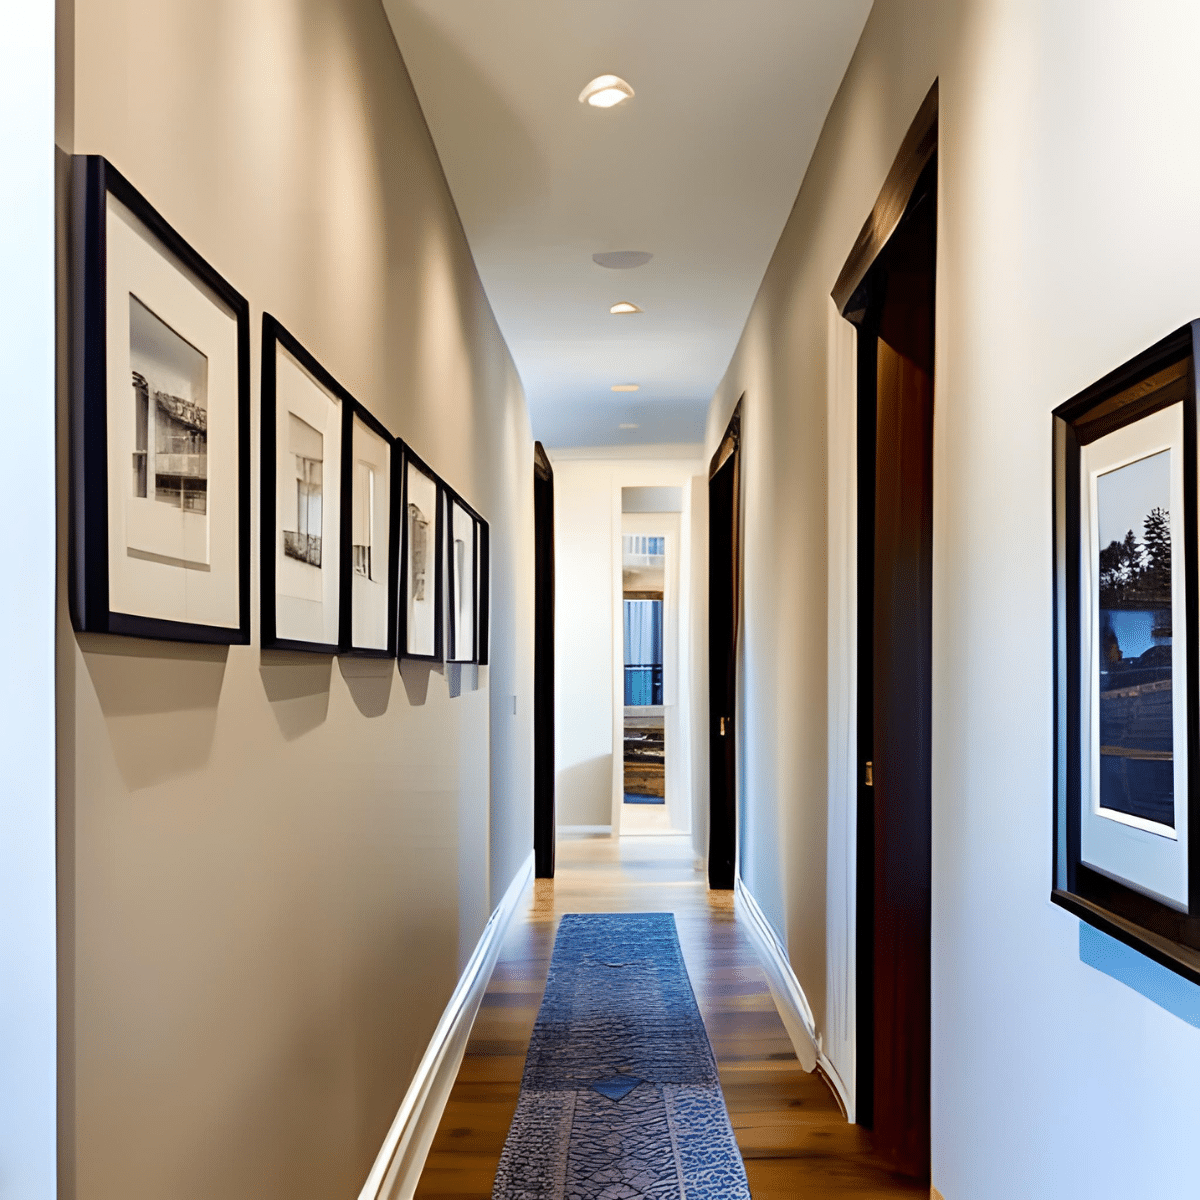 a home's narrow hallway with photos on the wall